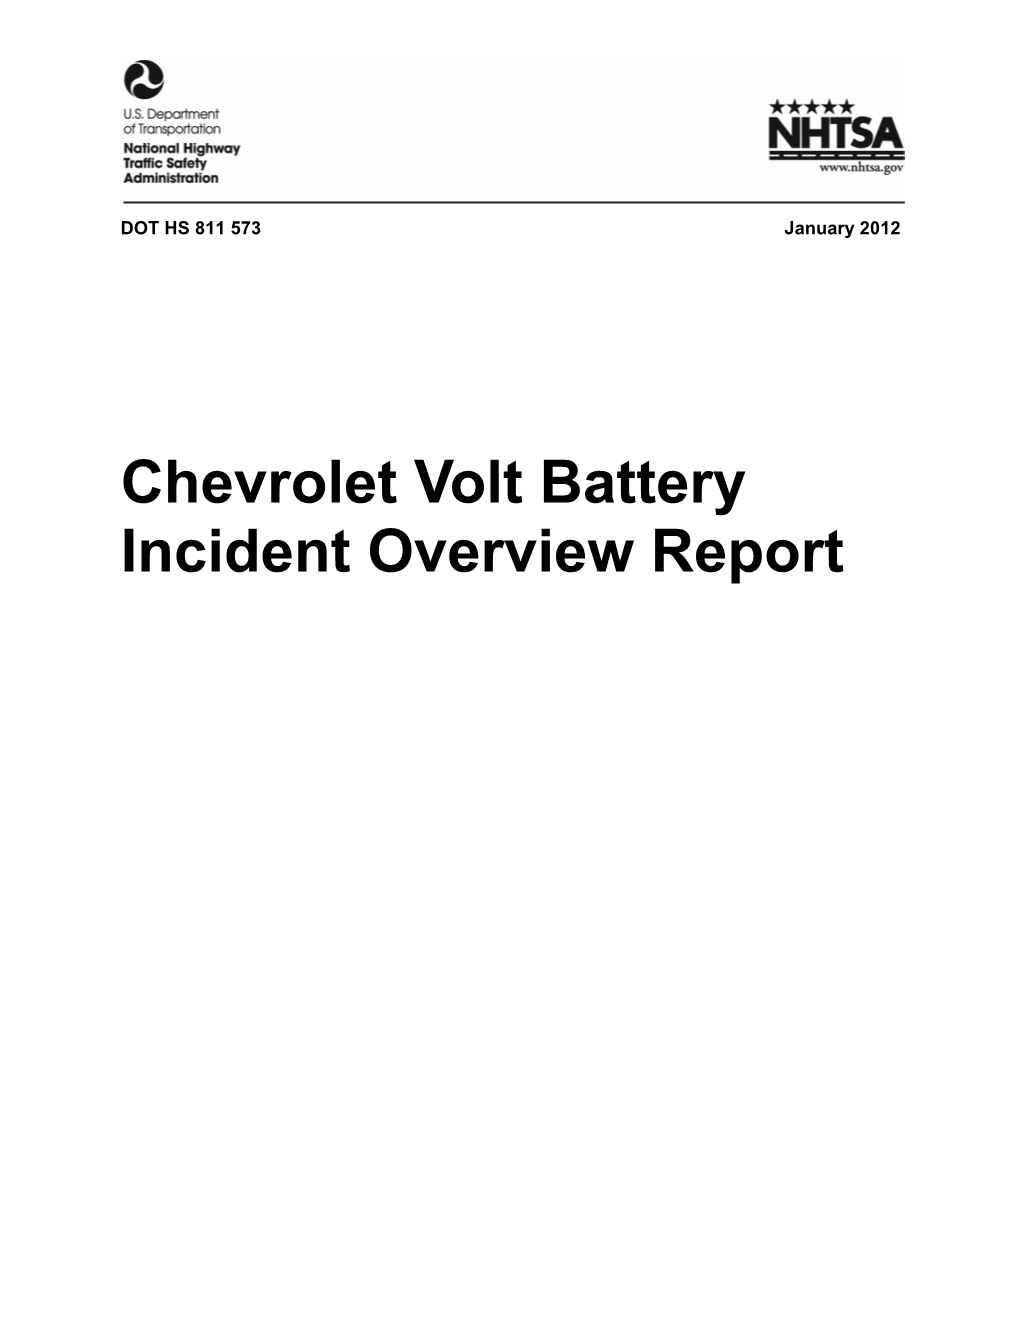 Chevrolet Volt Battery Incident Overview Report